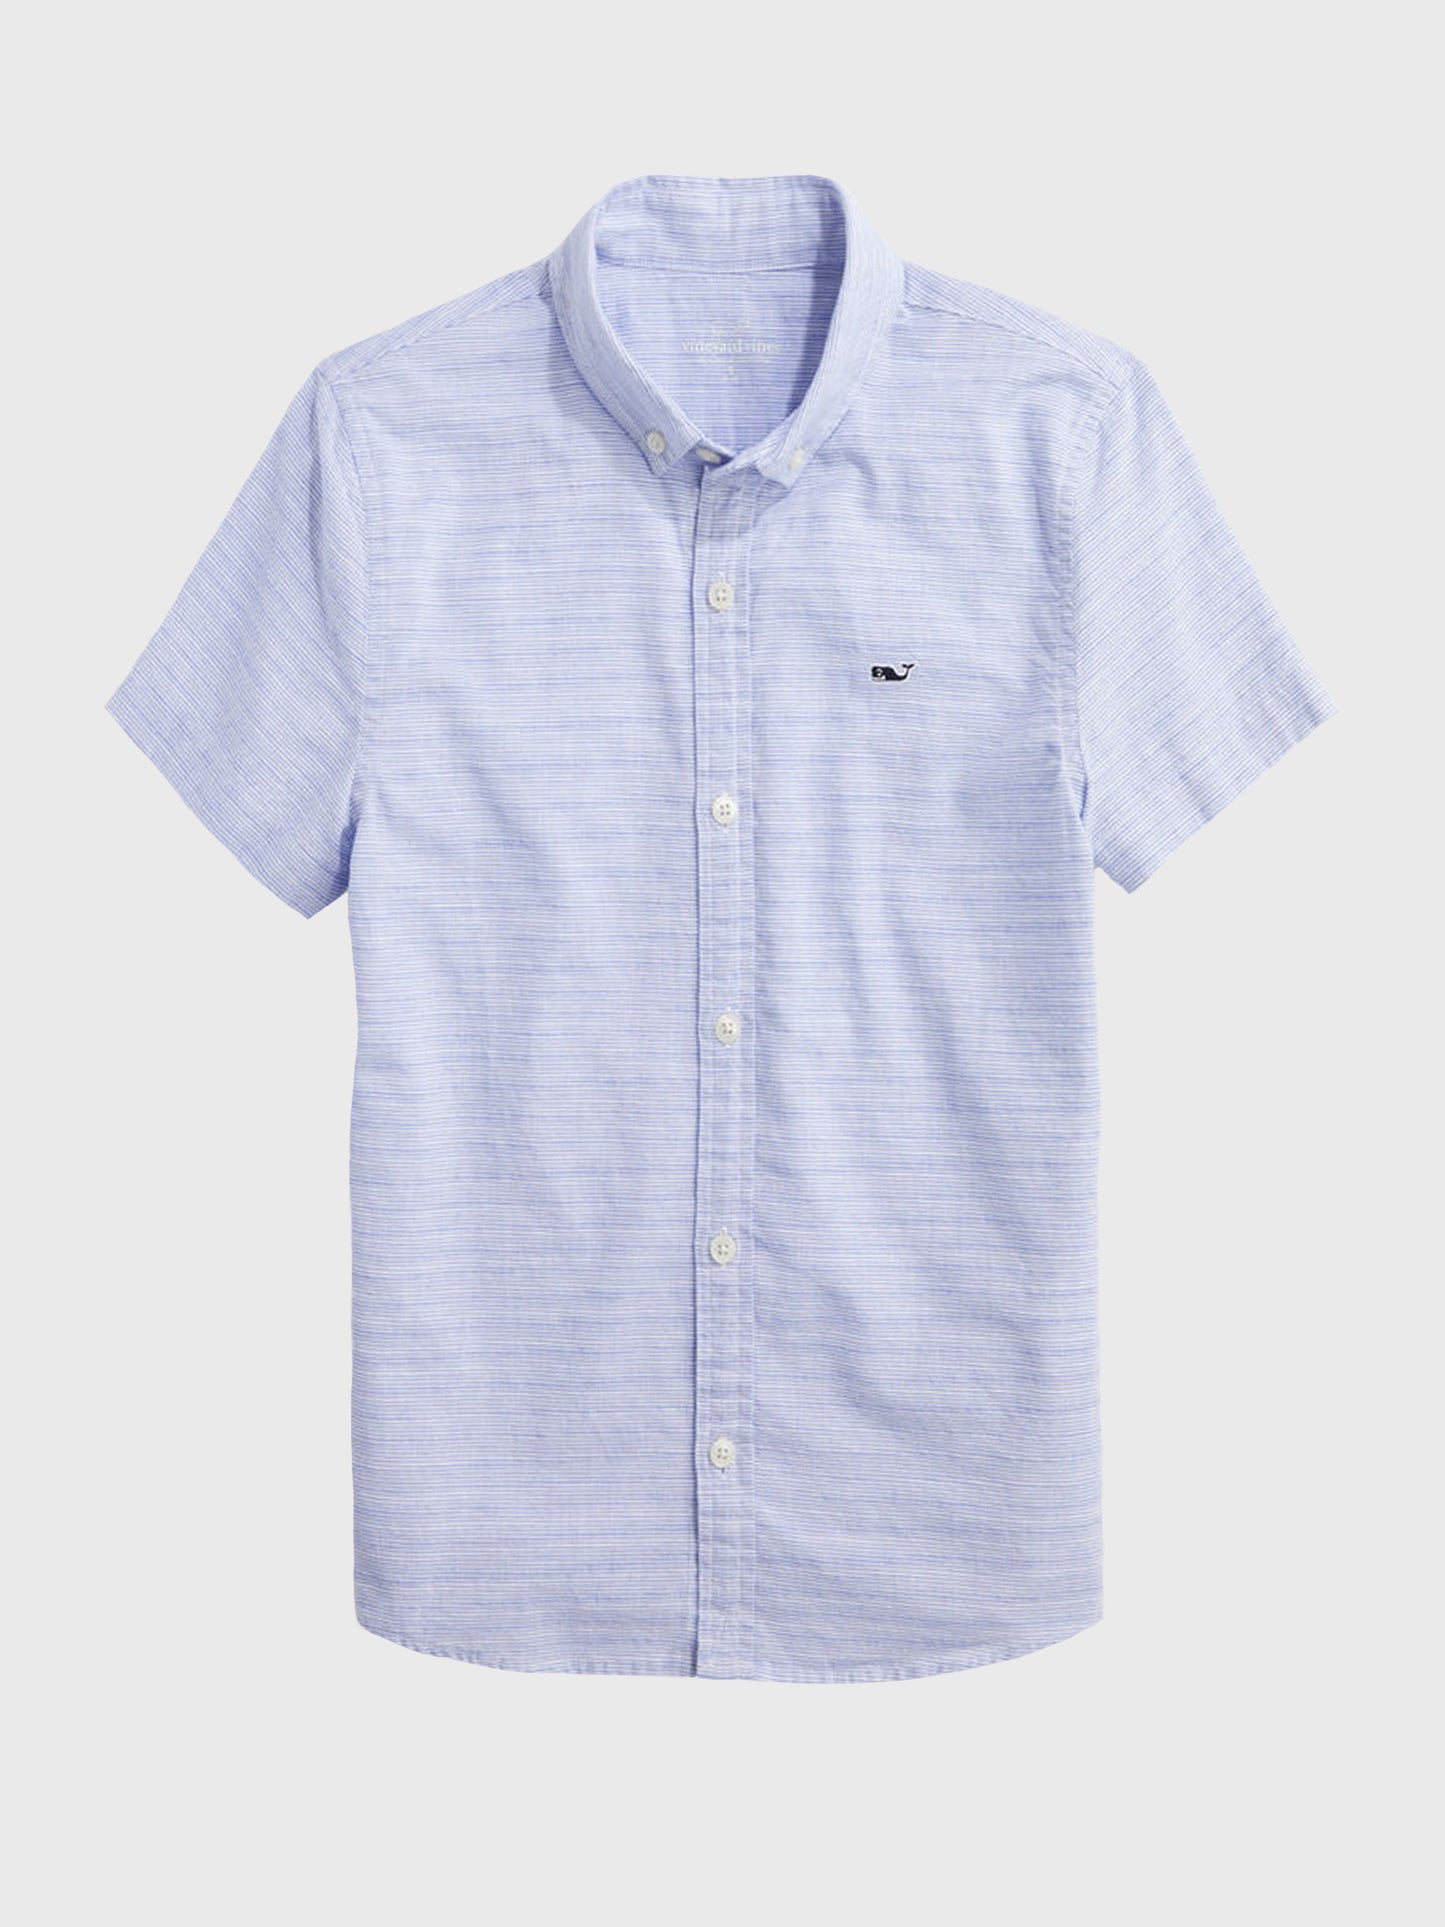 Vineyard Vines Boys' Classic Fit Short-Sleeve Shirt